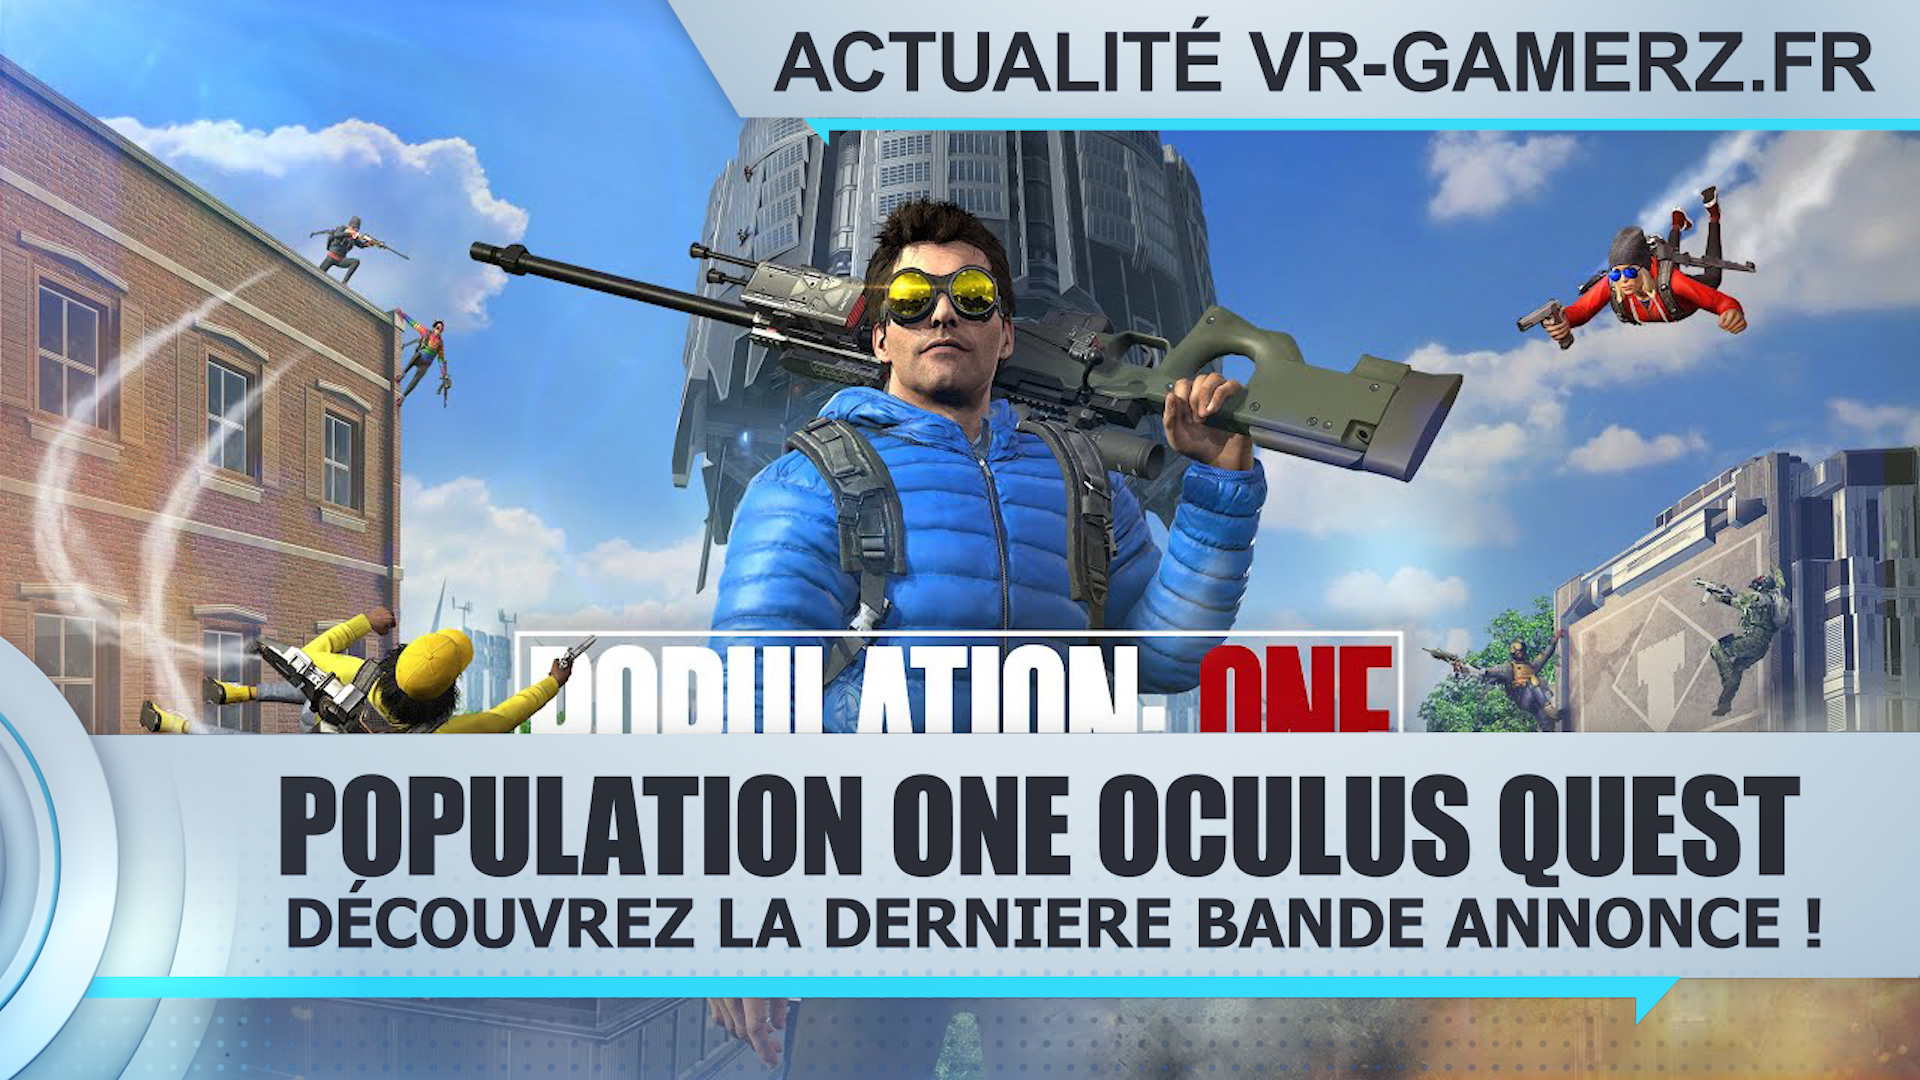 Population One Oculus quest : La sortie approche !